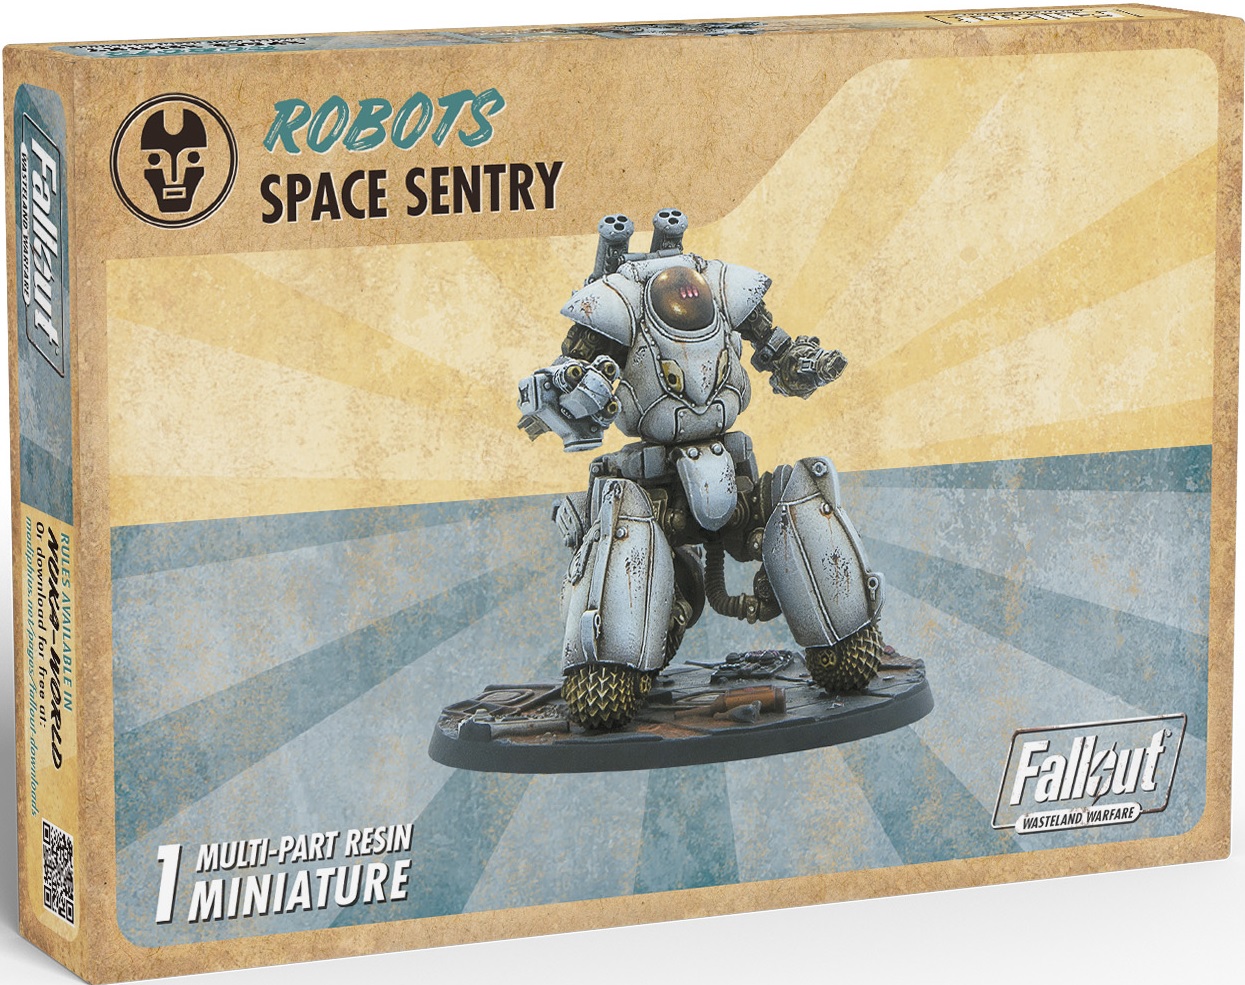 Fallout Wasteland Warfare: Robots Space Sentry 